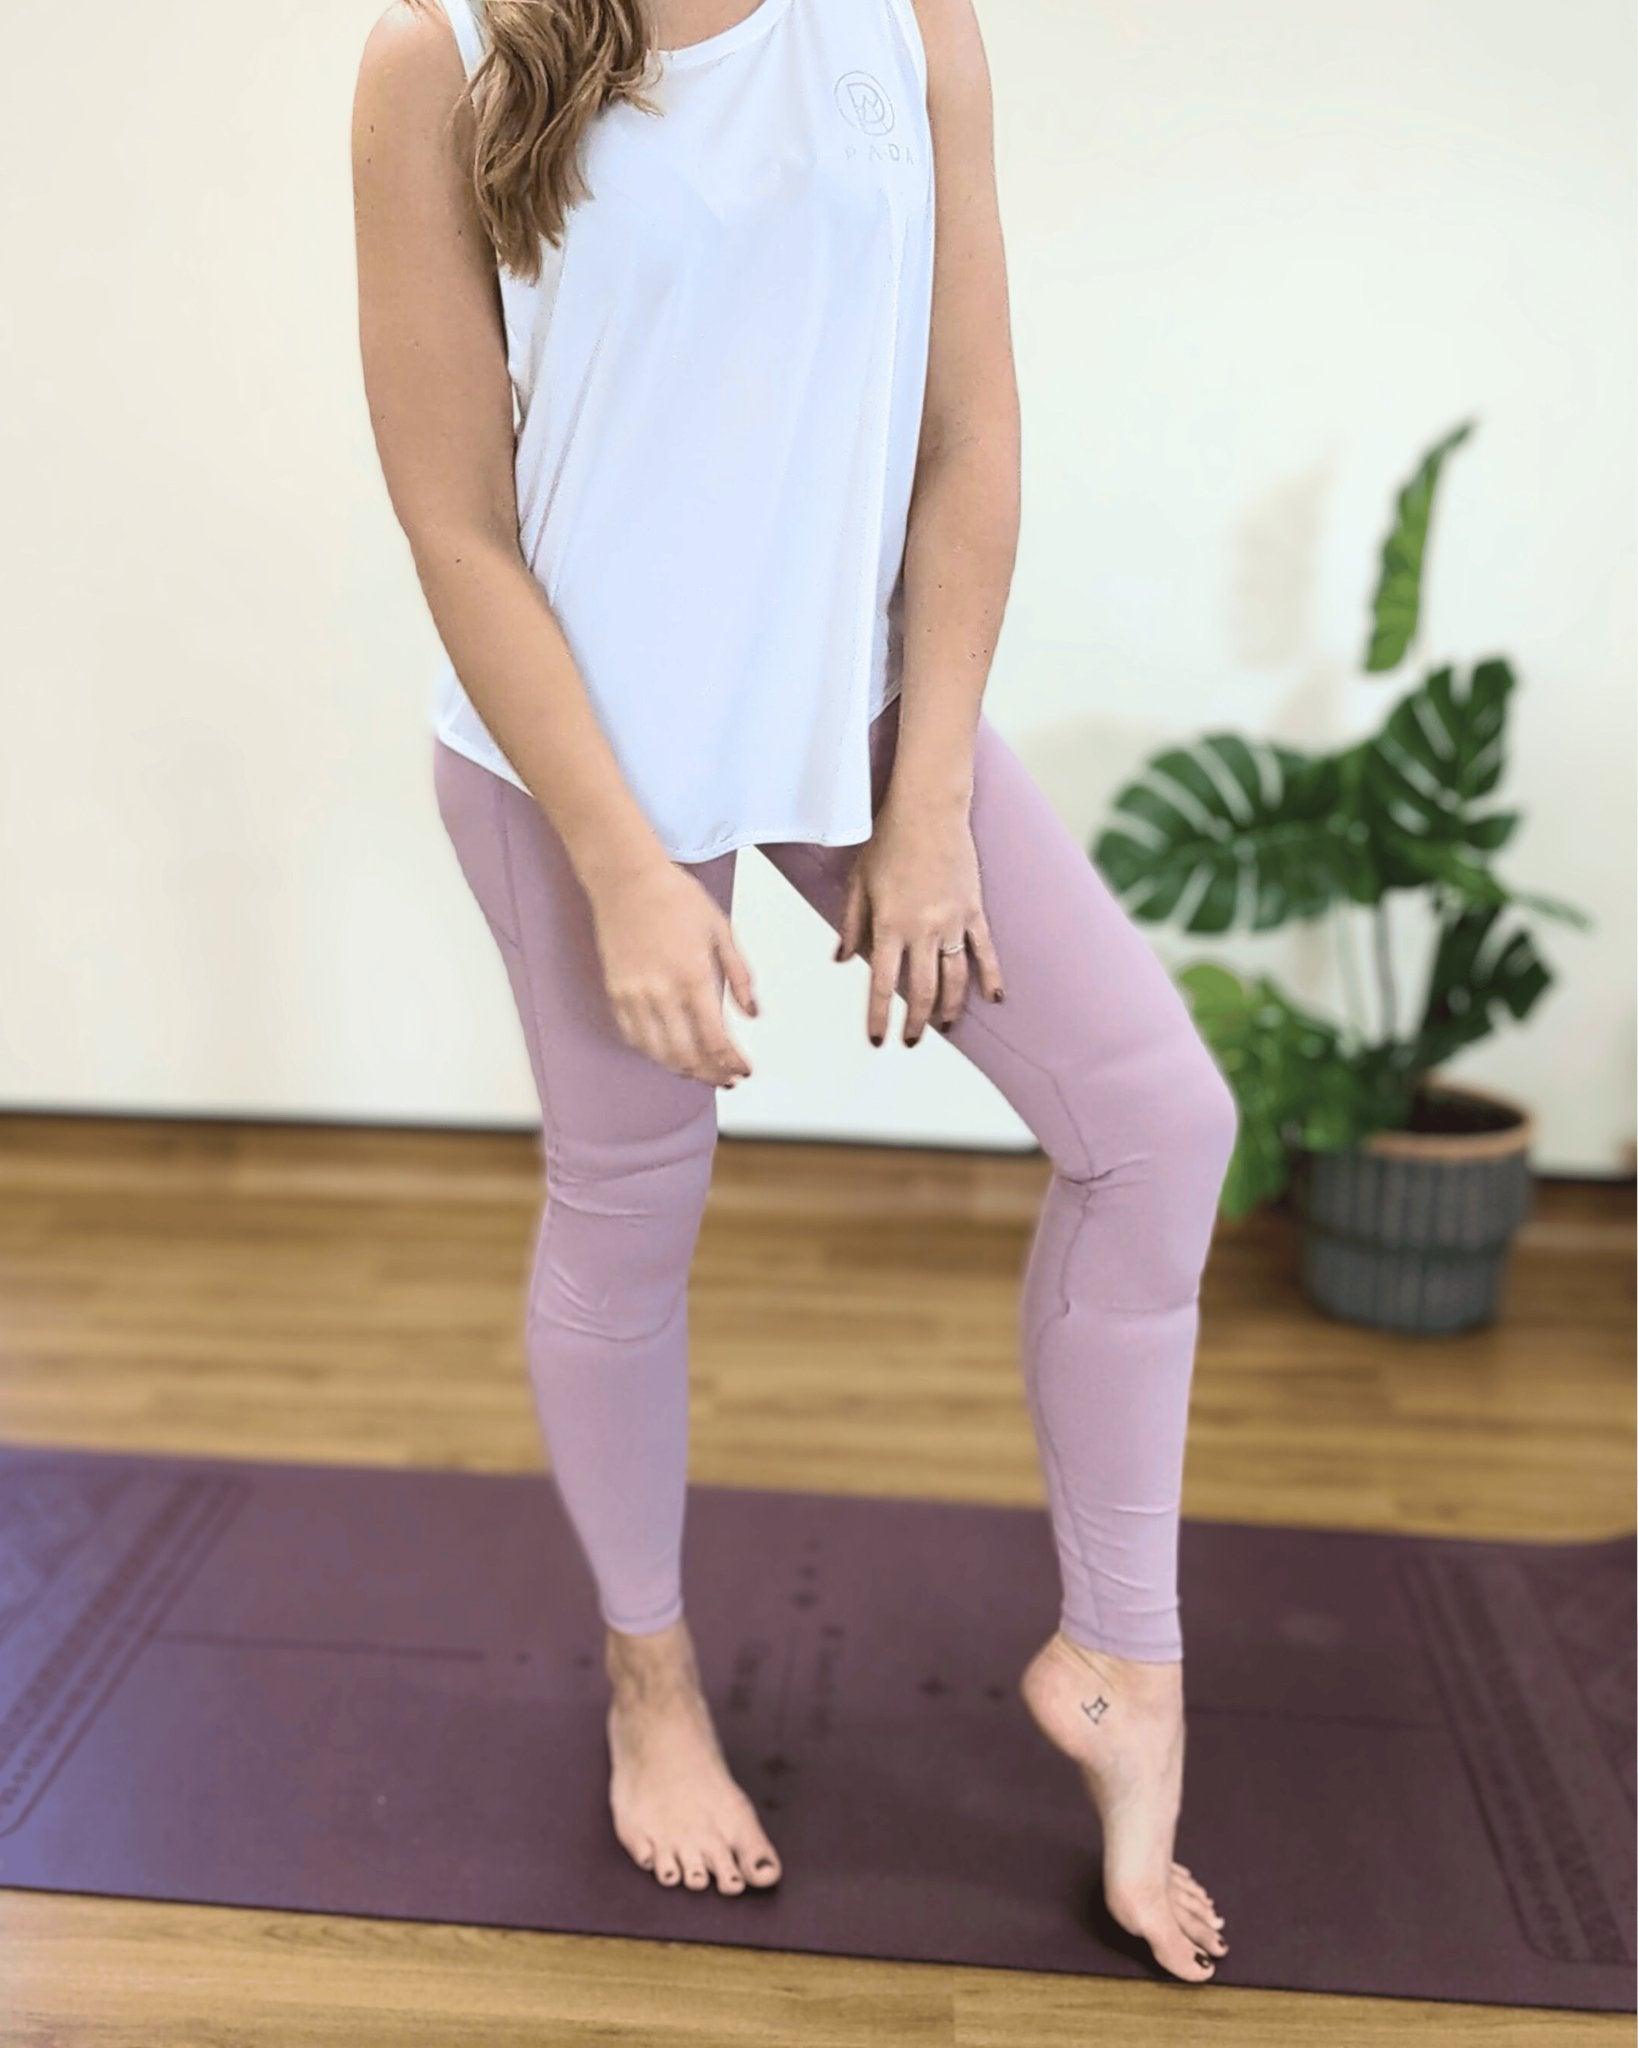 Yoga Knee & Elbow Pads – Violet – CoreNation Active